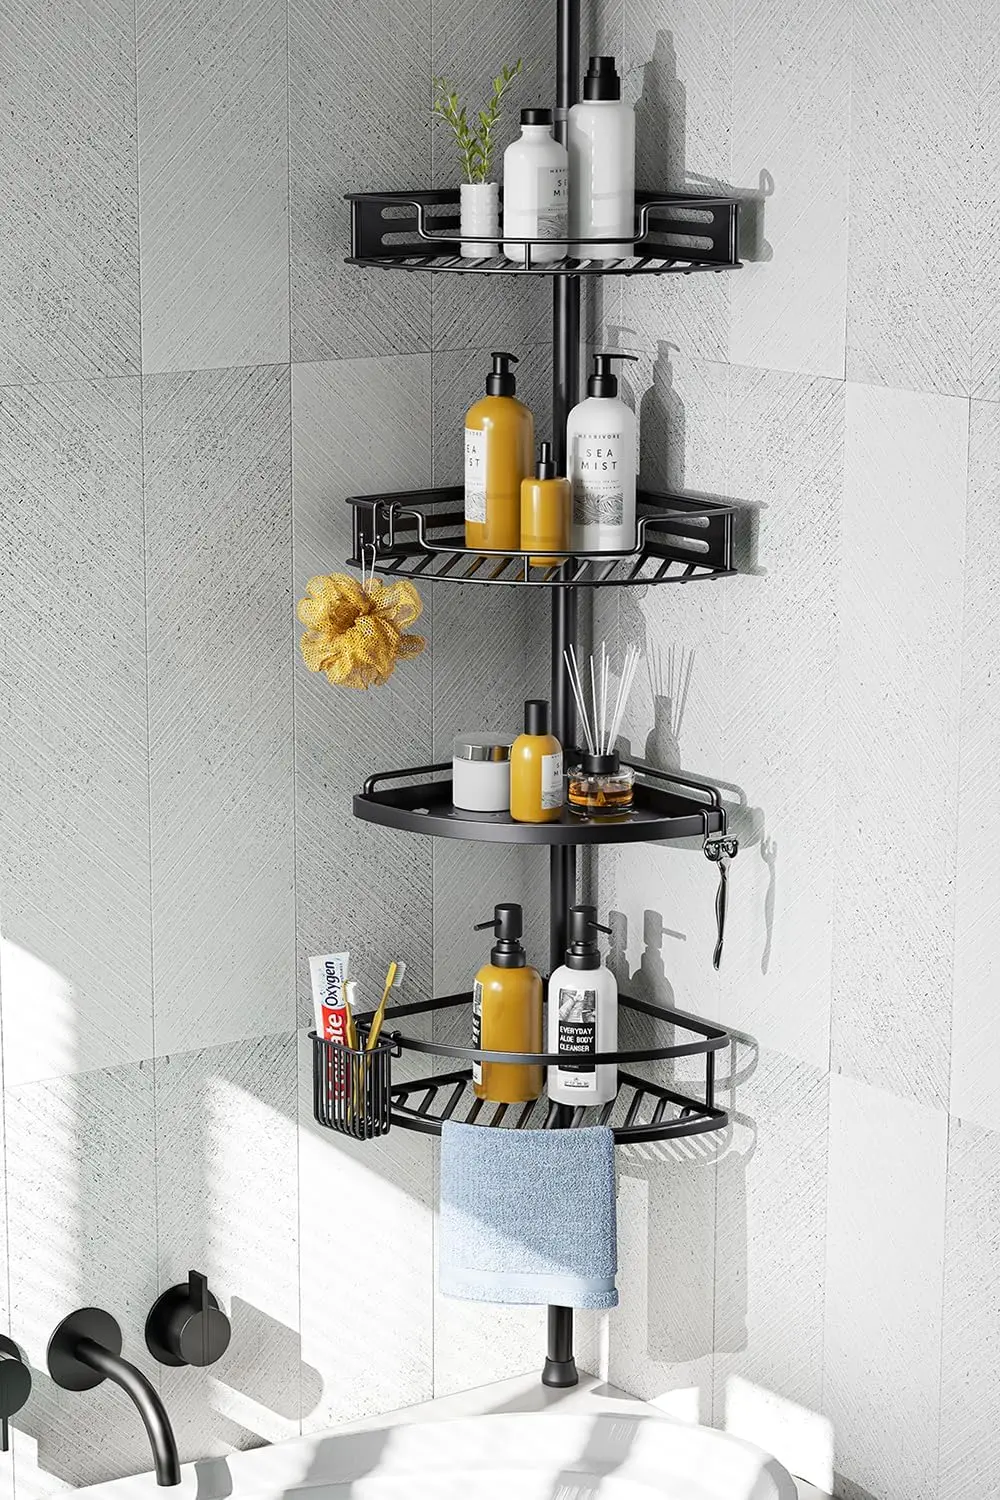 corner-shower-caddy-tension-pole-quick-installation-4-tier-rustproof-bathroom-organizer-shelves